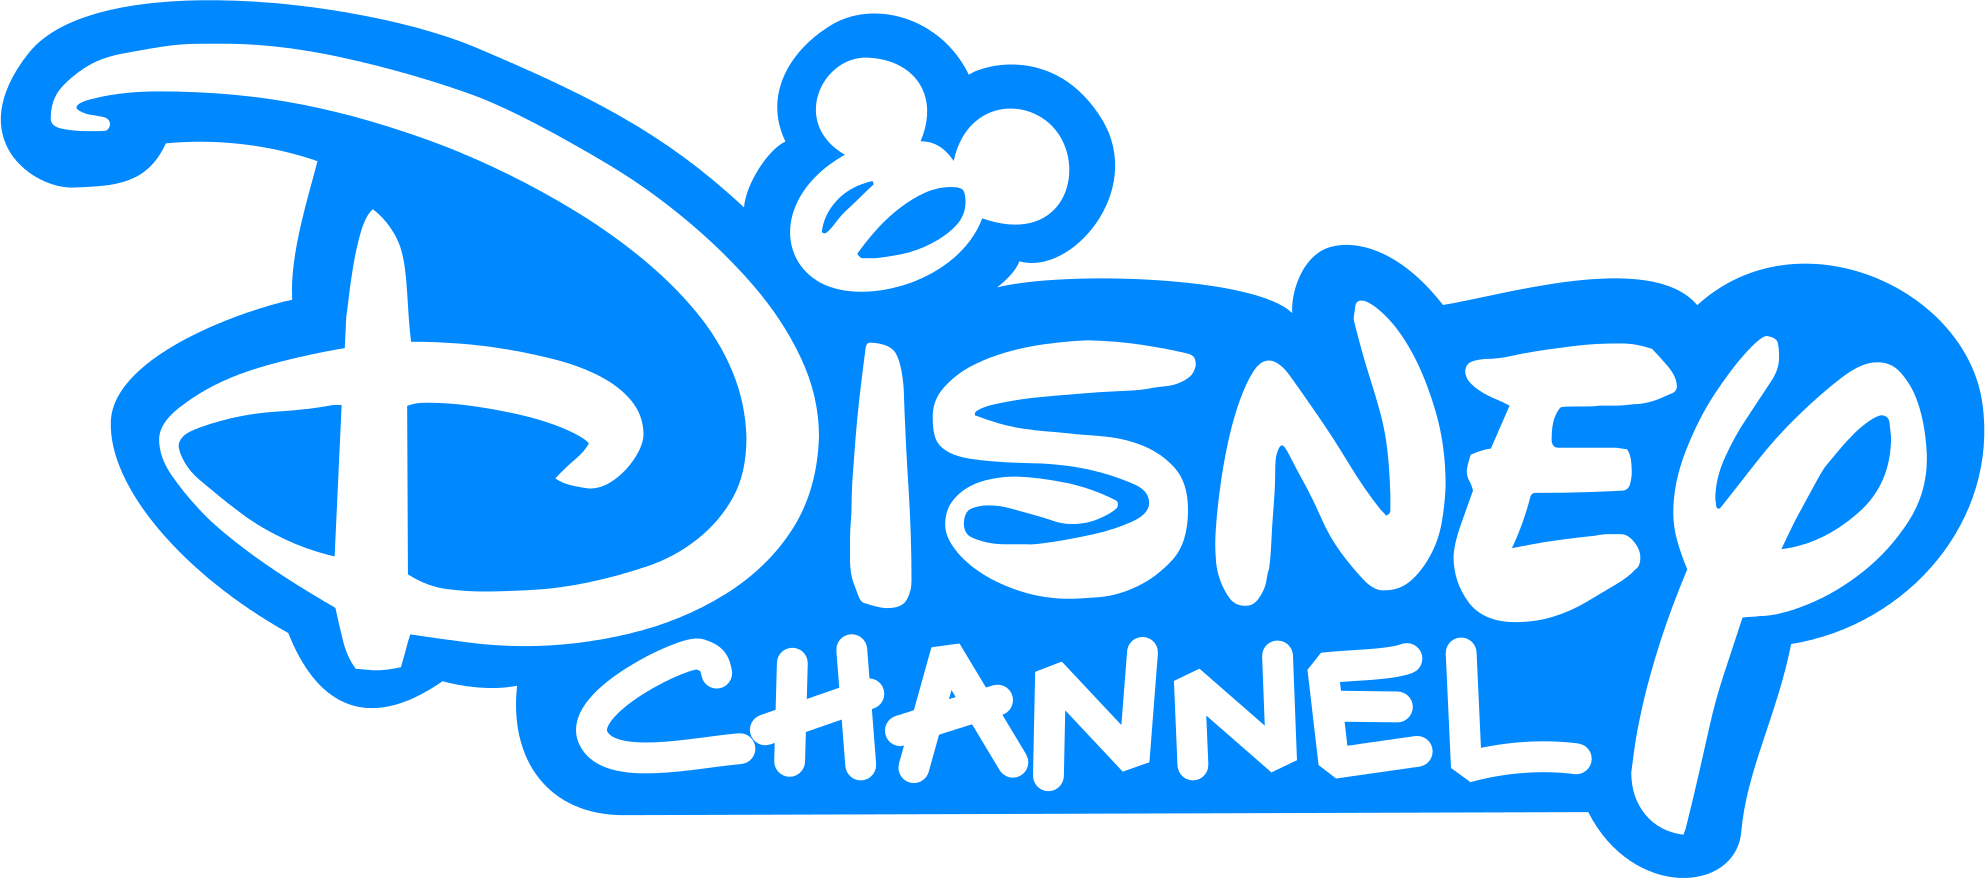 2015 Disney Channel Logo - Image - Disney Channel.png | Captain Underpants Wiki | FANDOM ...